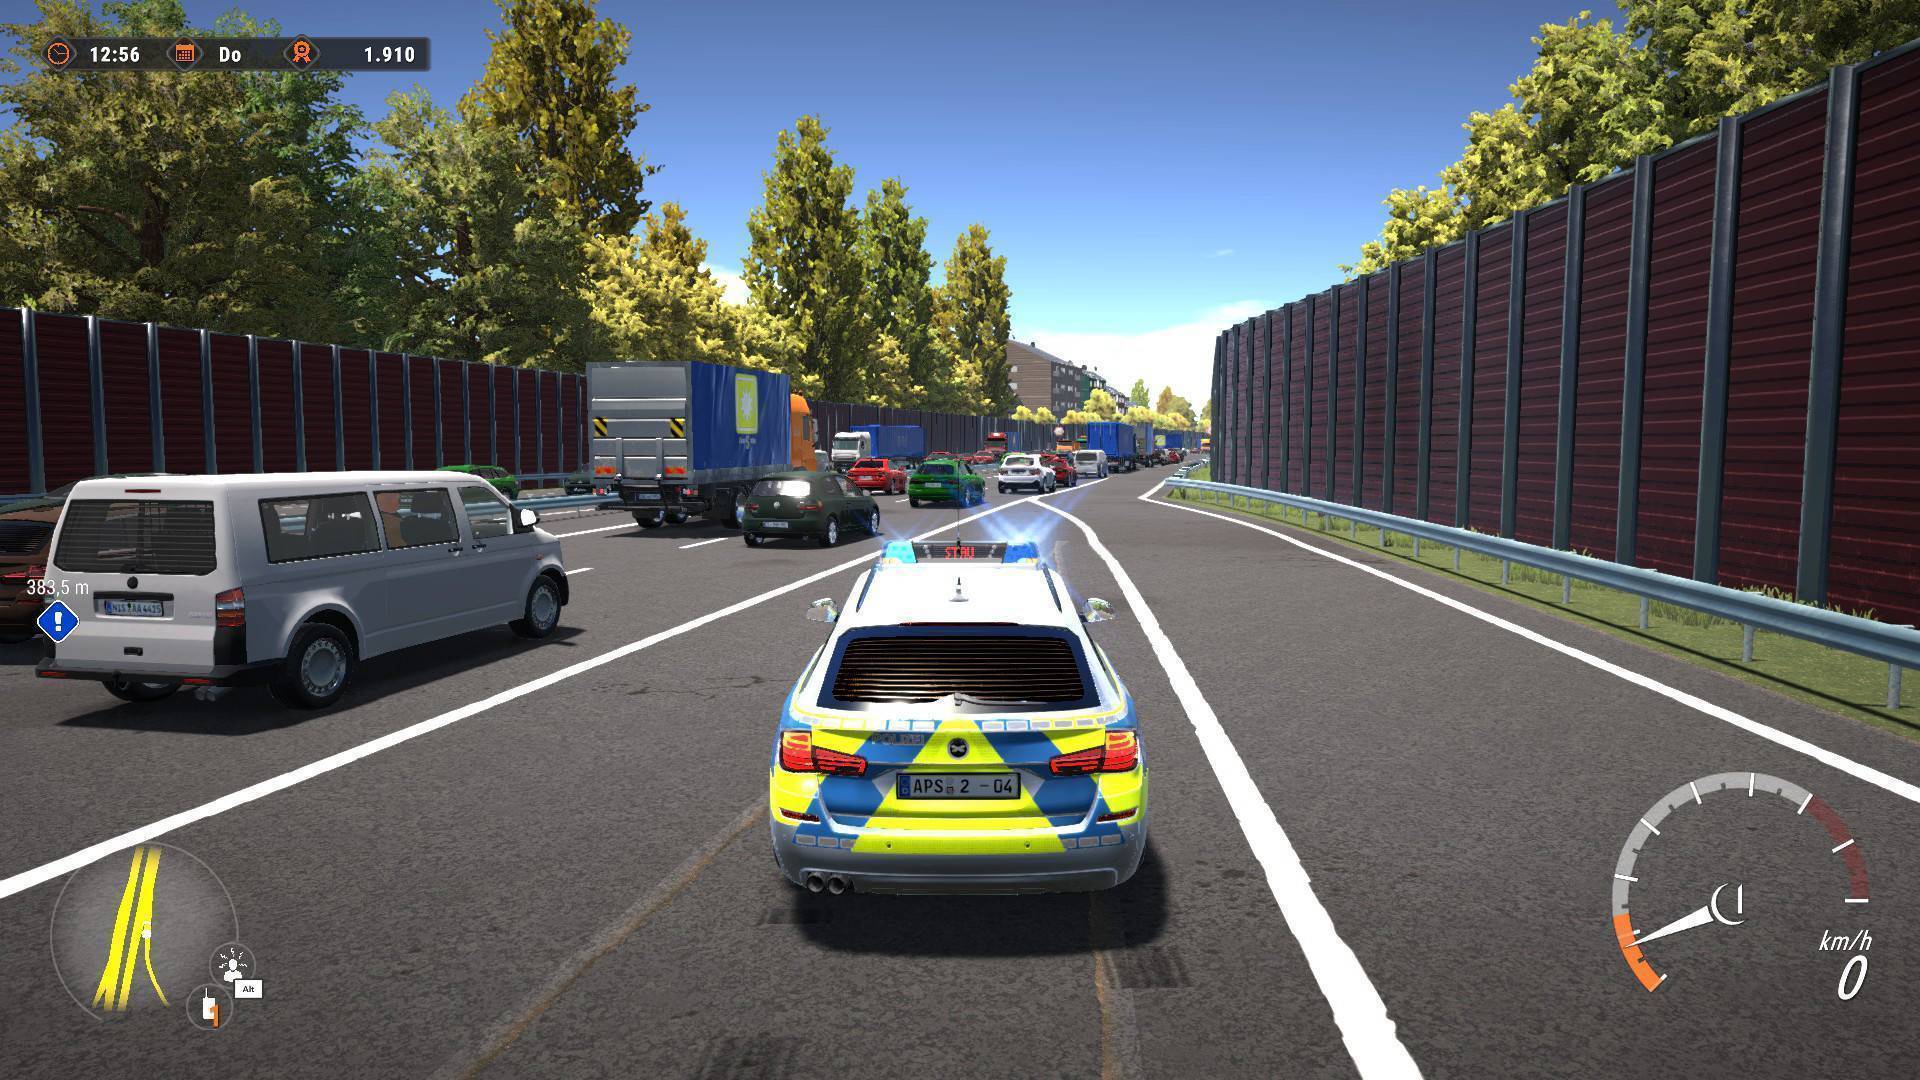 autobahn-police-simulator-2-xbox-one-cheap-price-of-8-50